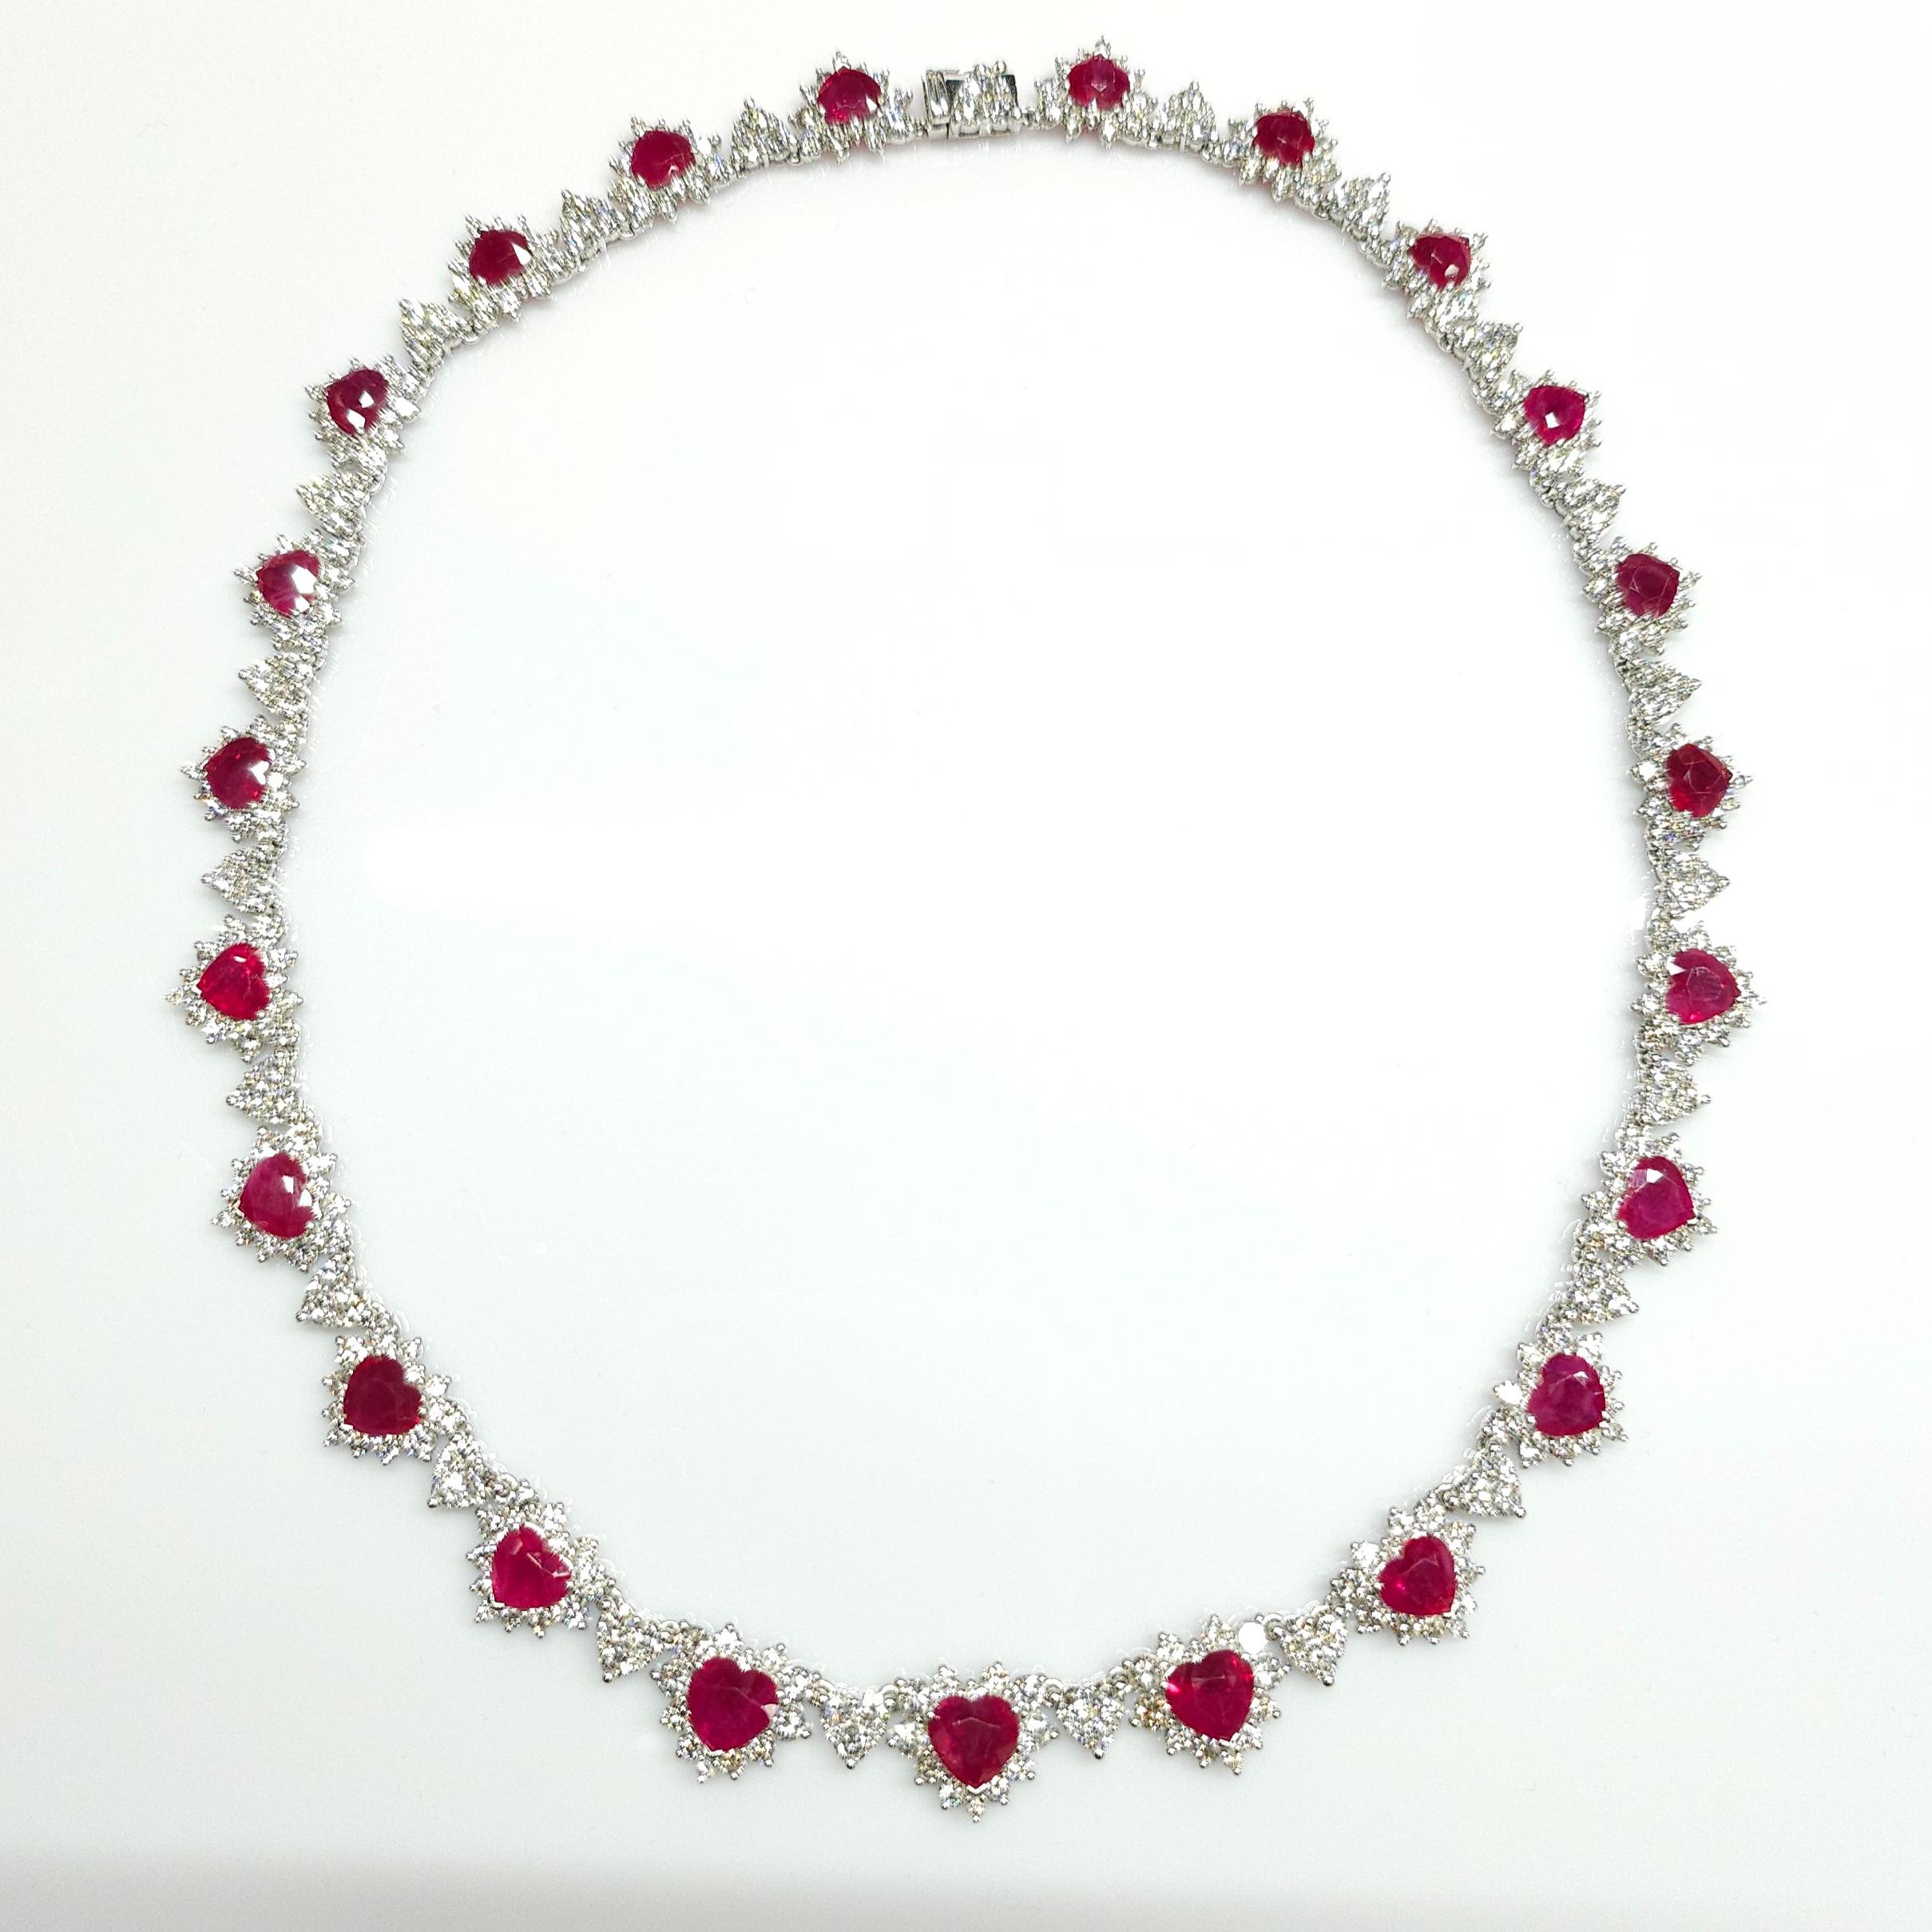 IGI Certified 26.58 Carat Burma Ruby & 18.85 Carat Diamond Necklace in 18K Gold For Sale 4